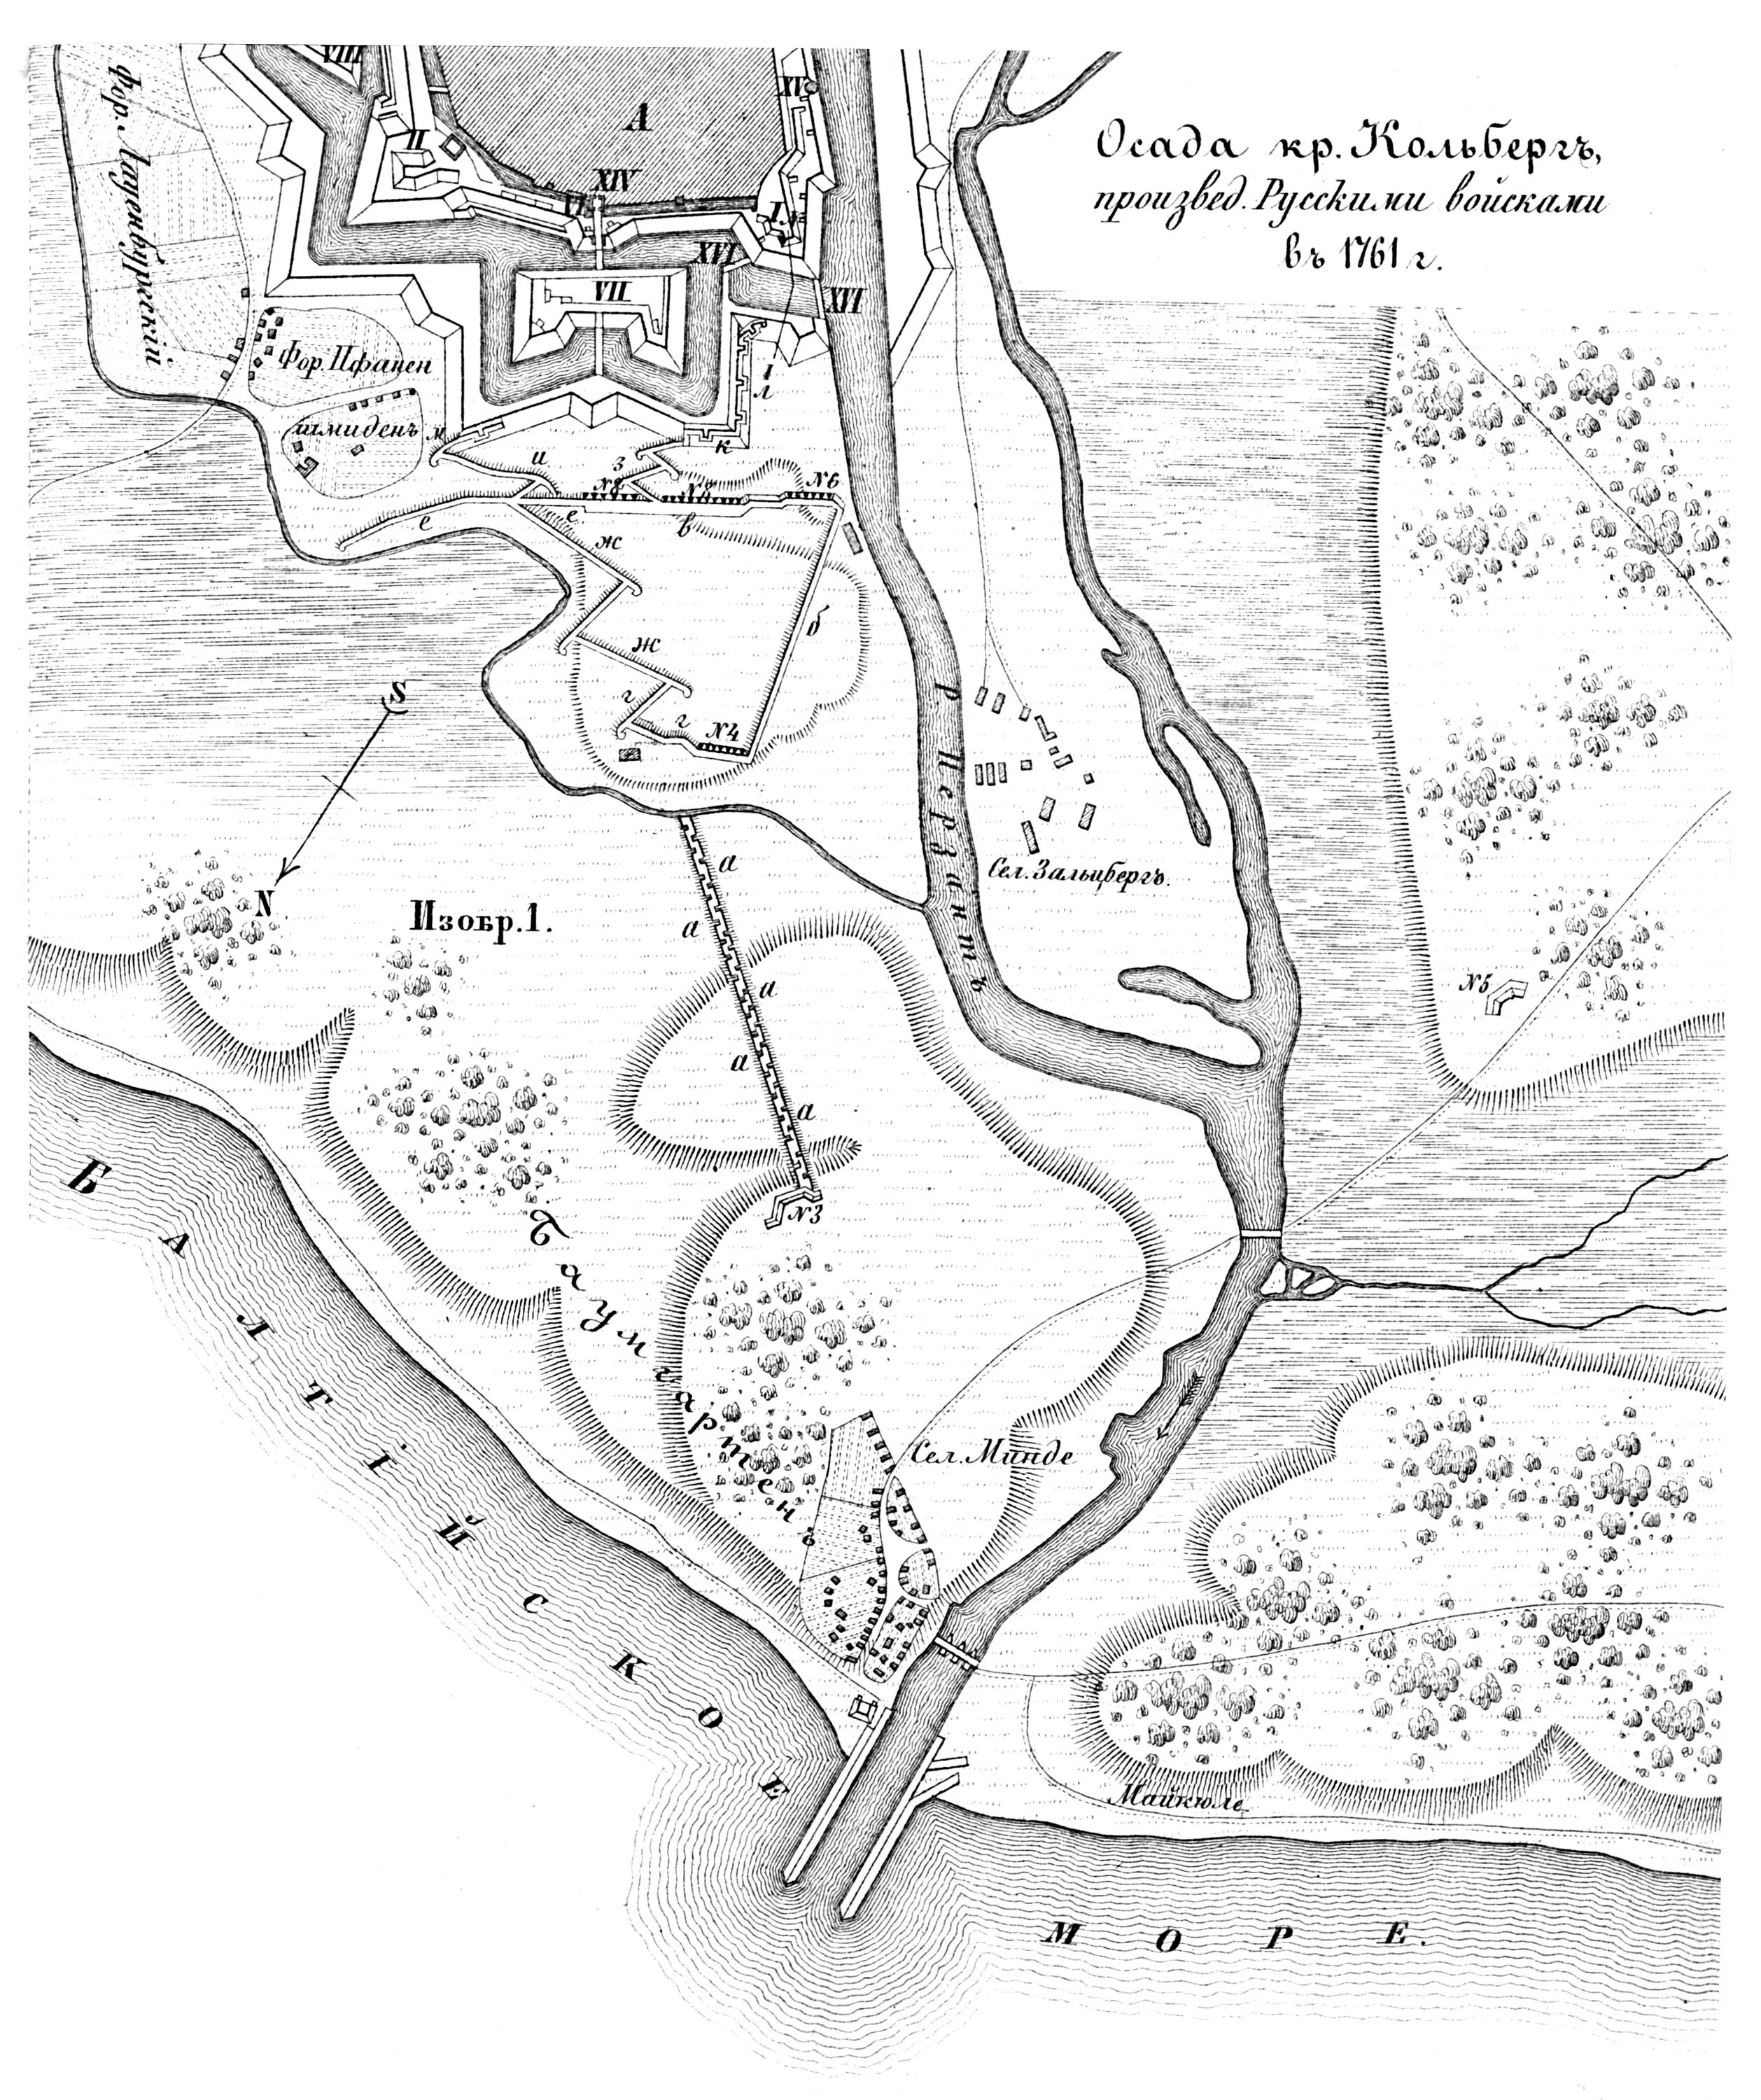 Осада Кольберга 1761. Взятие крепости Кольберг 1761. Осада Кольберга карта-схема. Взятие Кольберга 1761 карта.